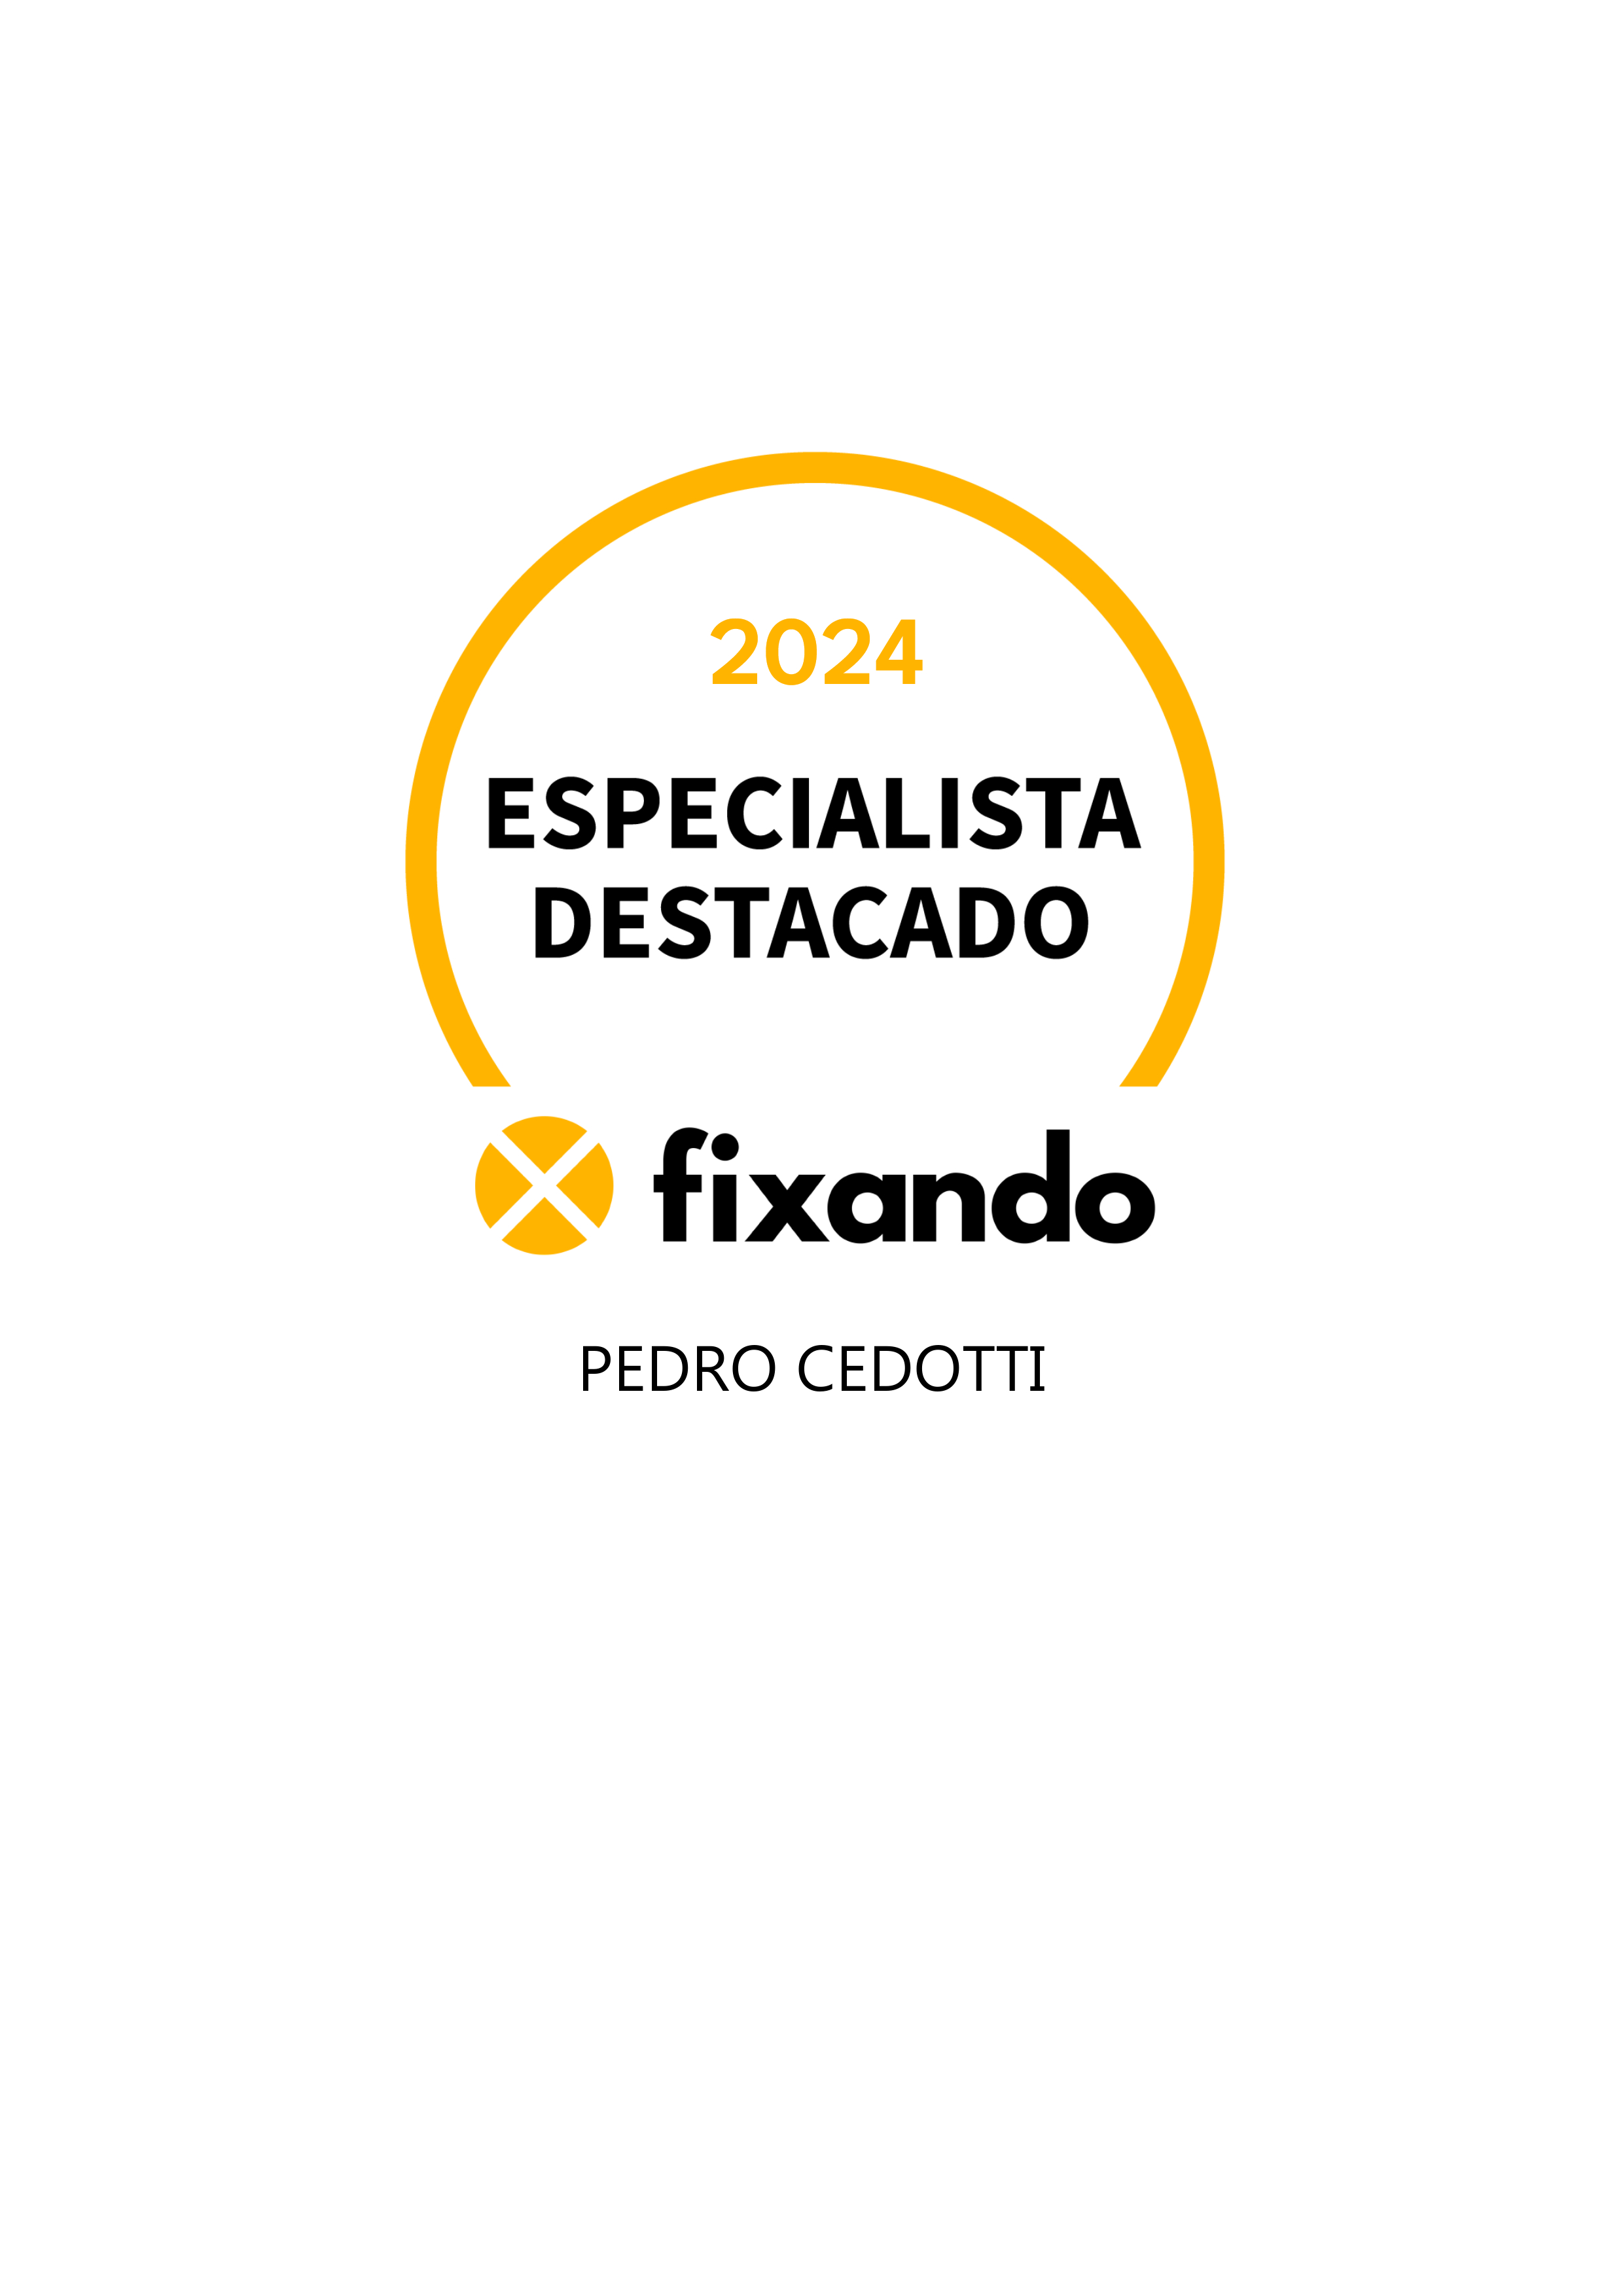 Pedro Cedotti - Matosinhos - Design de Logotipos